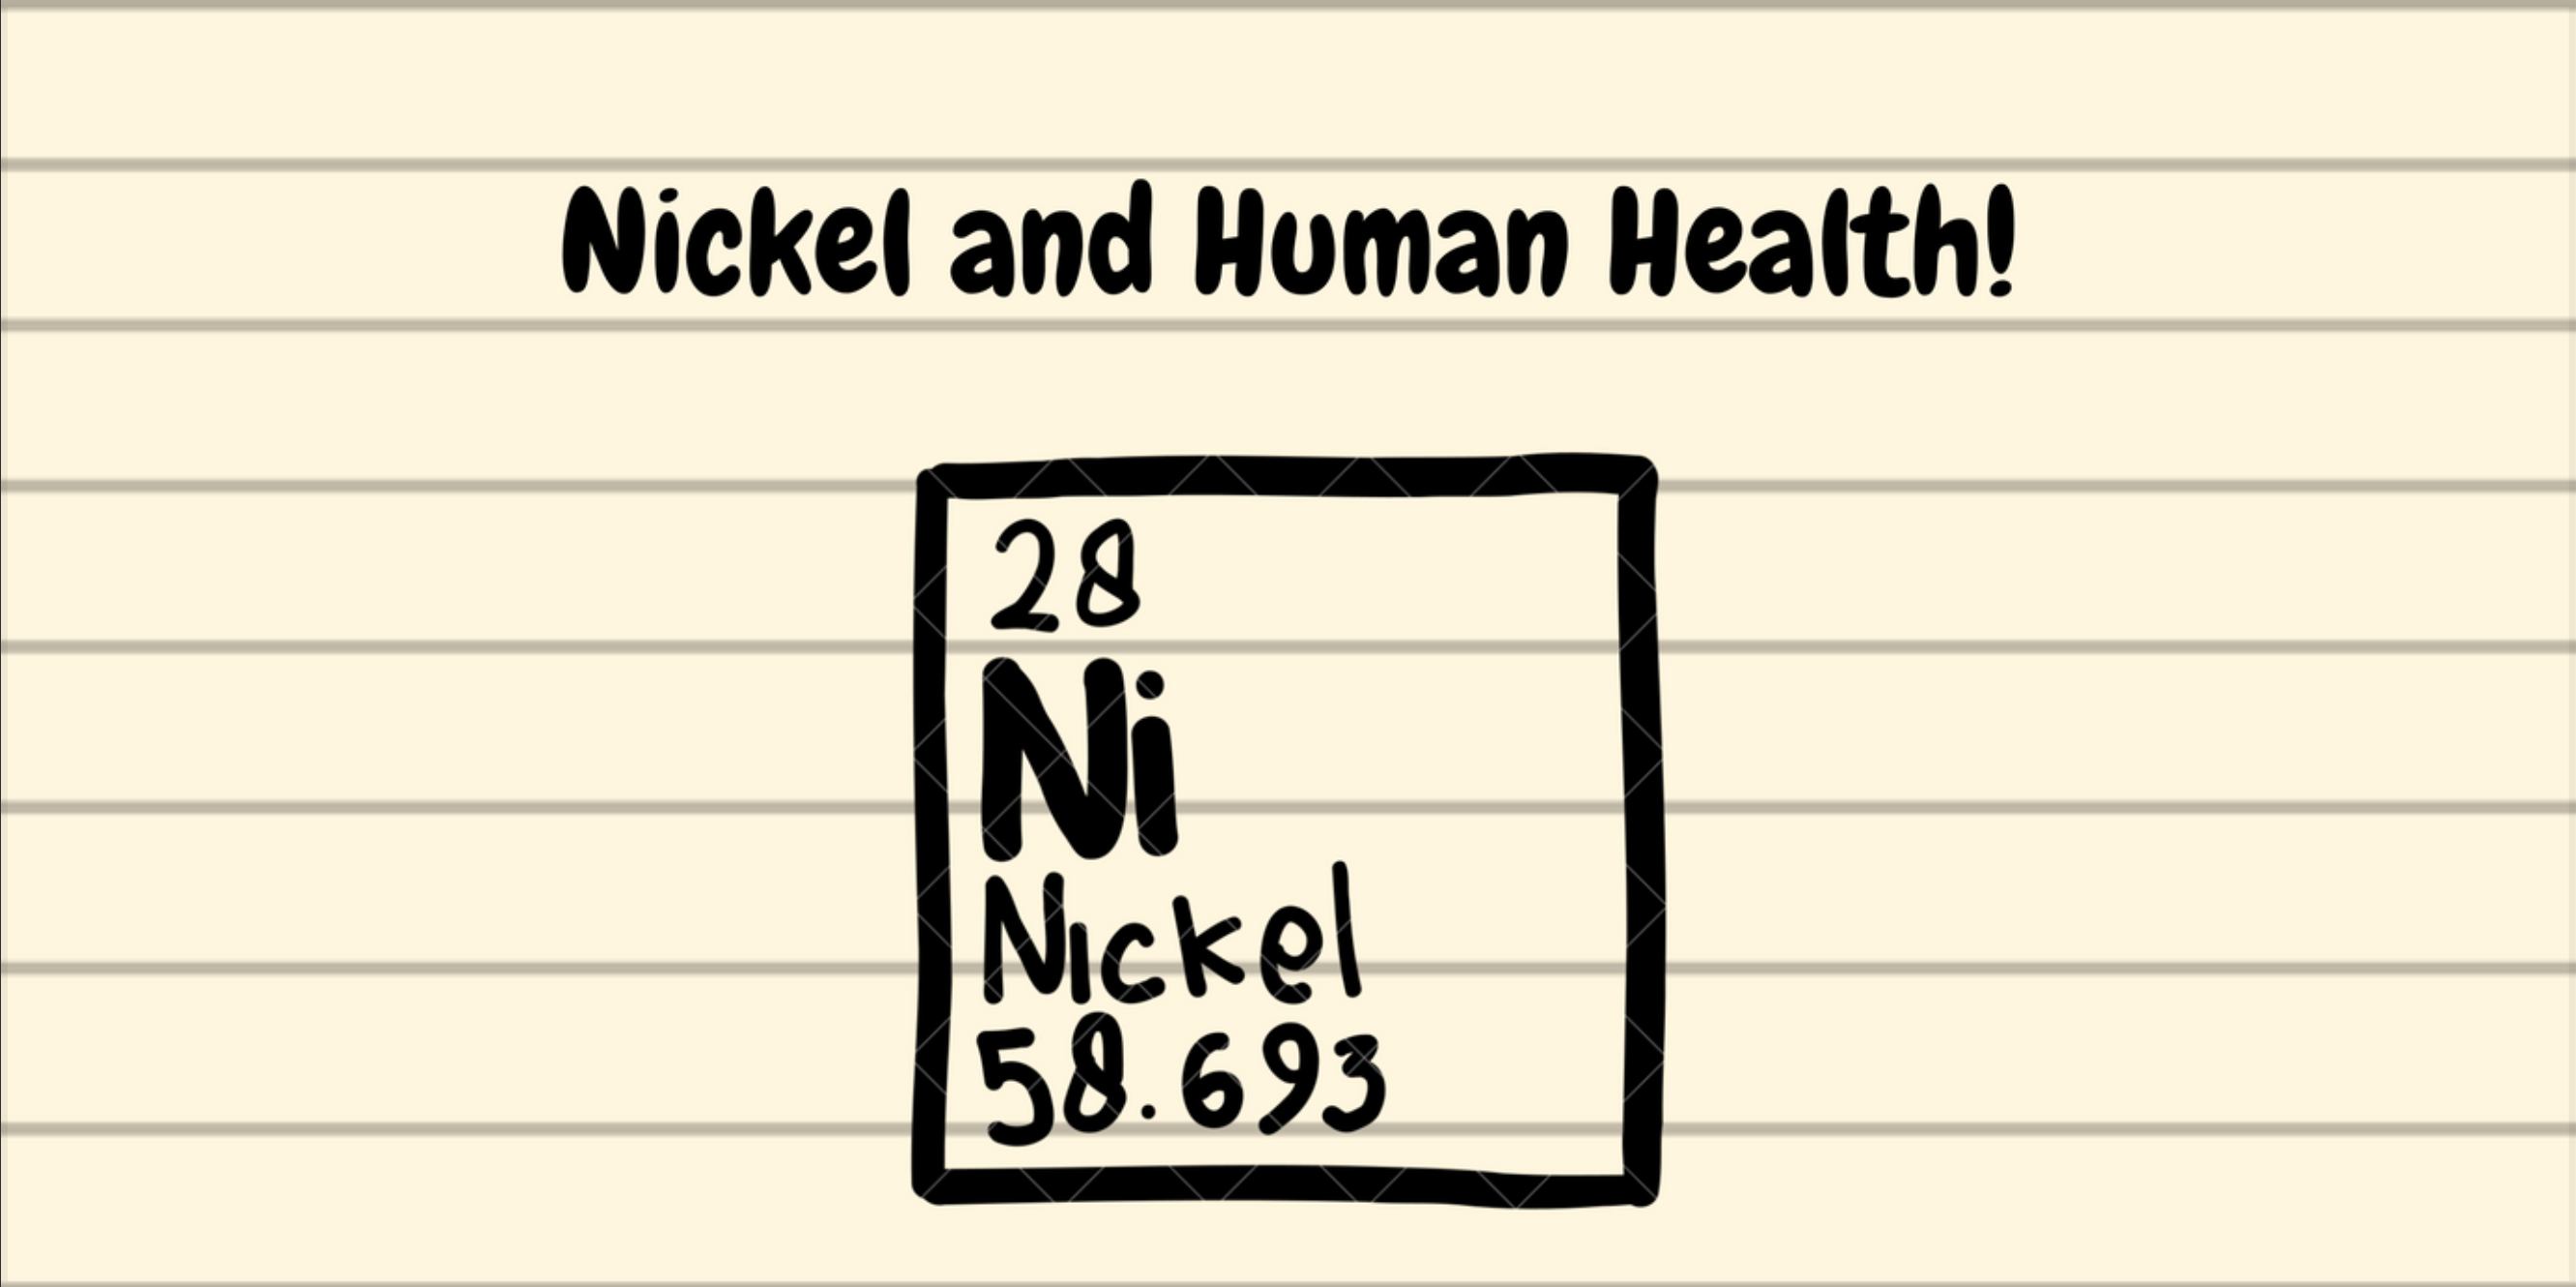 Nickel and Human Health!